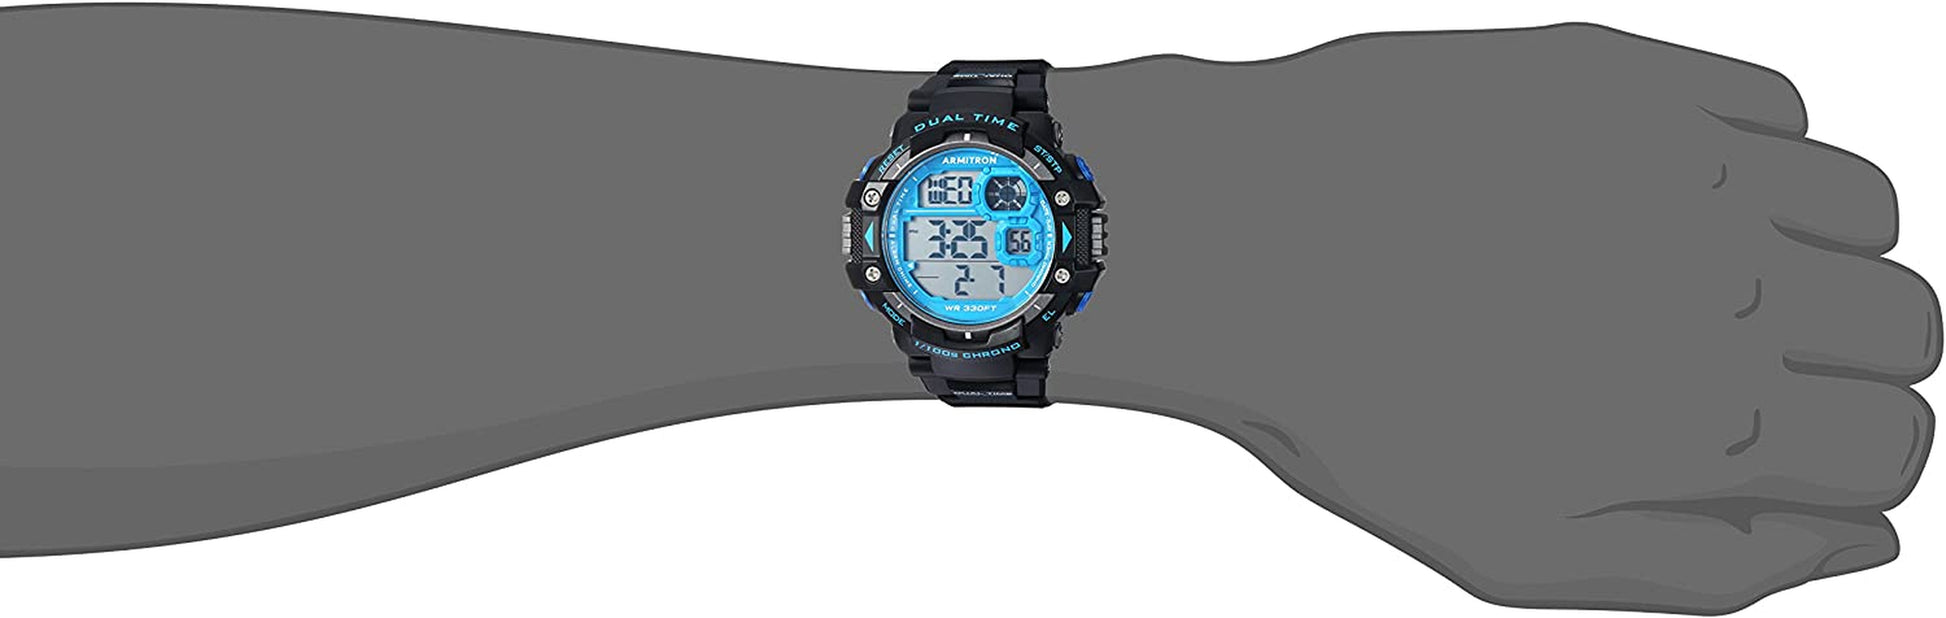 Armitron Sport Men's Digital Chronograph Watch